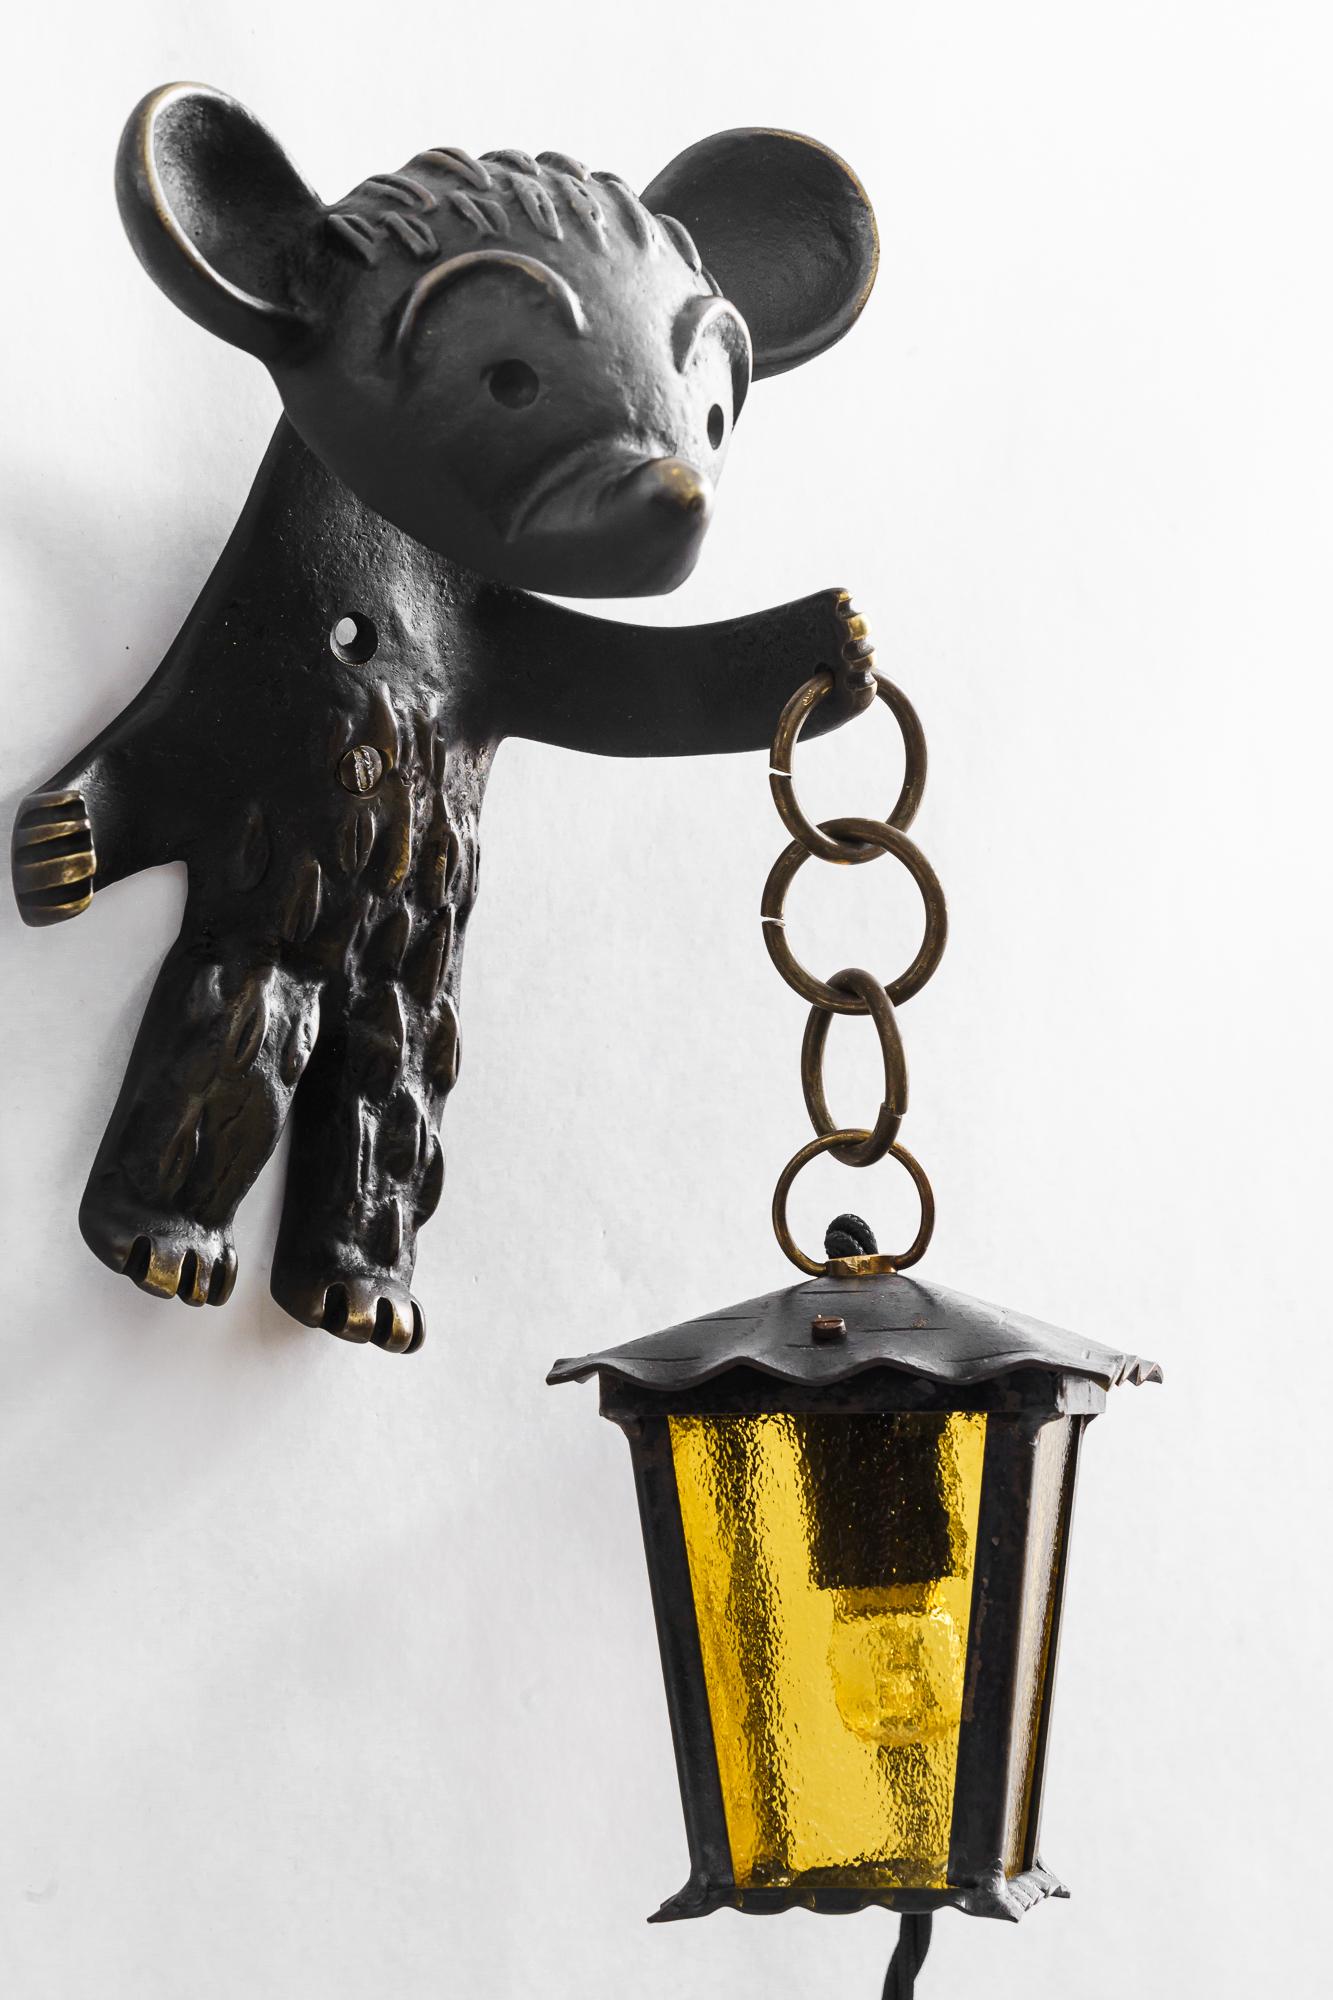 Blackened Rare walter bosse for hertha baller bear wall lamp holding a lantern vienna 1950